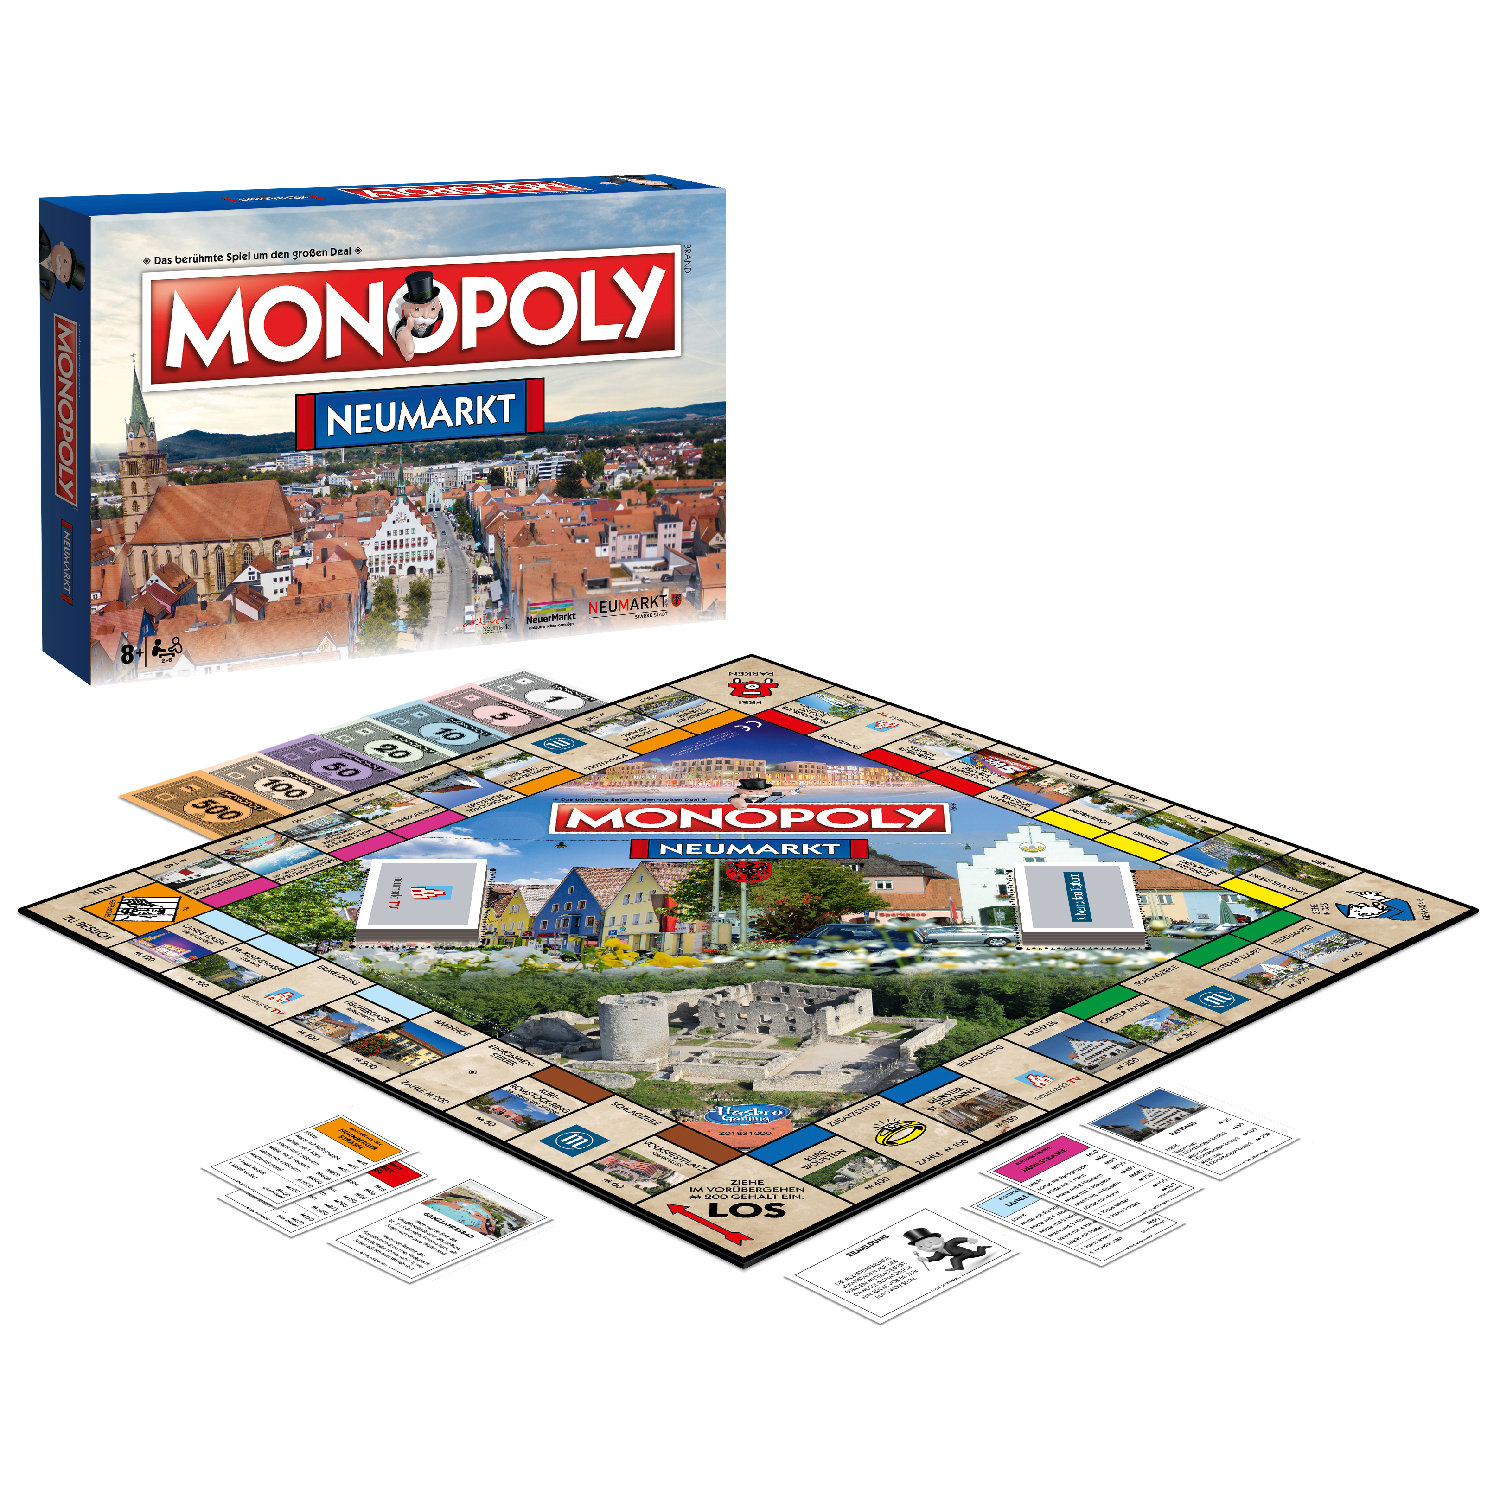 Monopoly Neumarkt